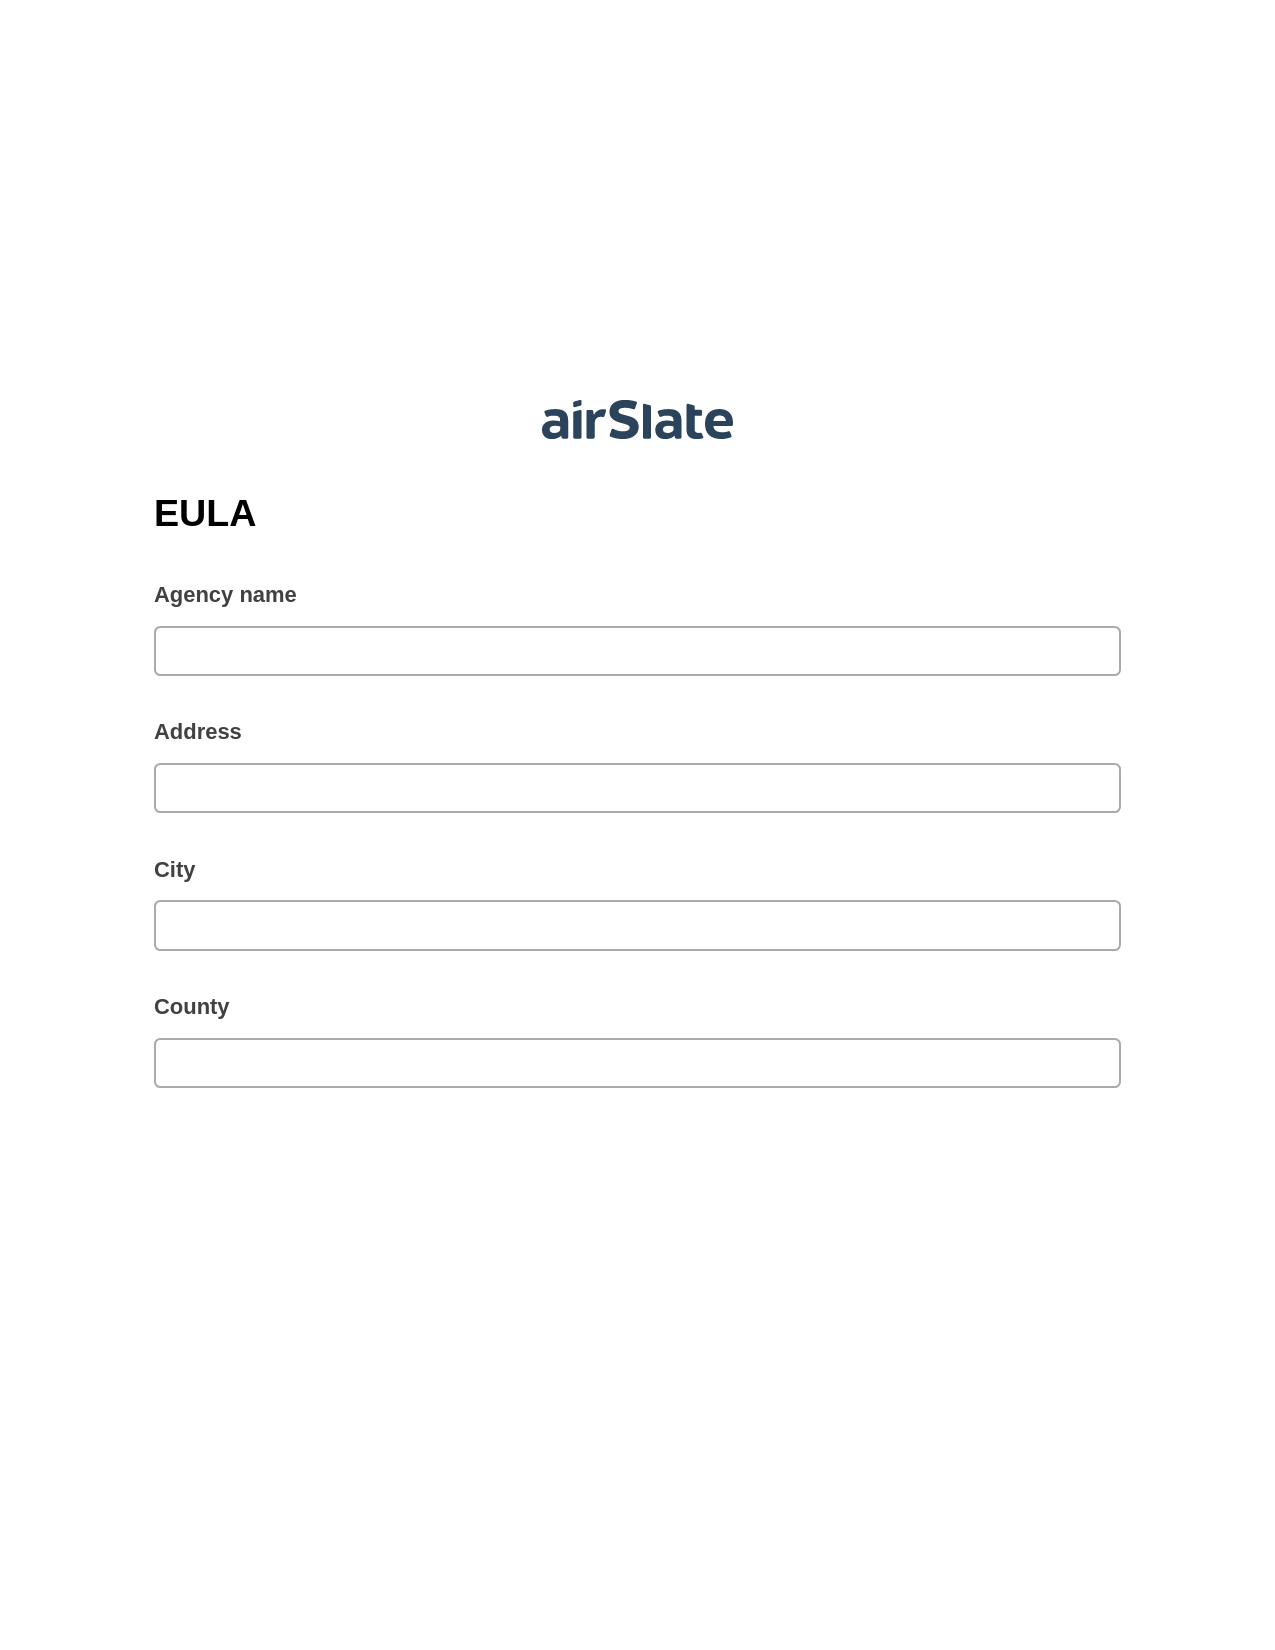 EULA Pre-fill from Google Sheet Dropdown Options Bot, Revoke Access Bot, Archive to SharePoint Folder Bot